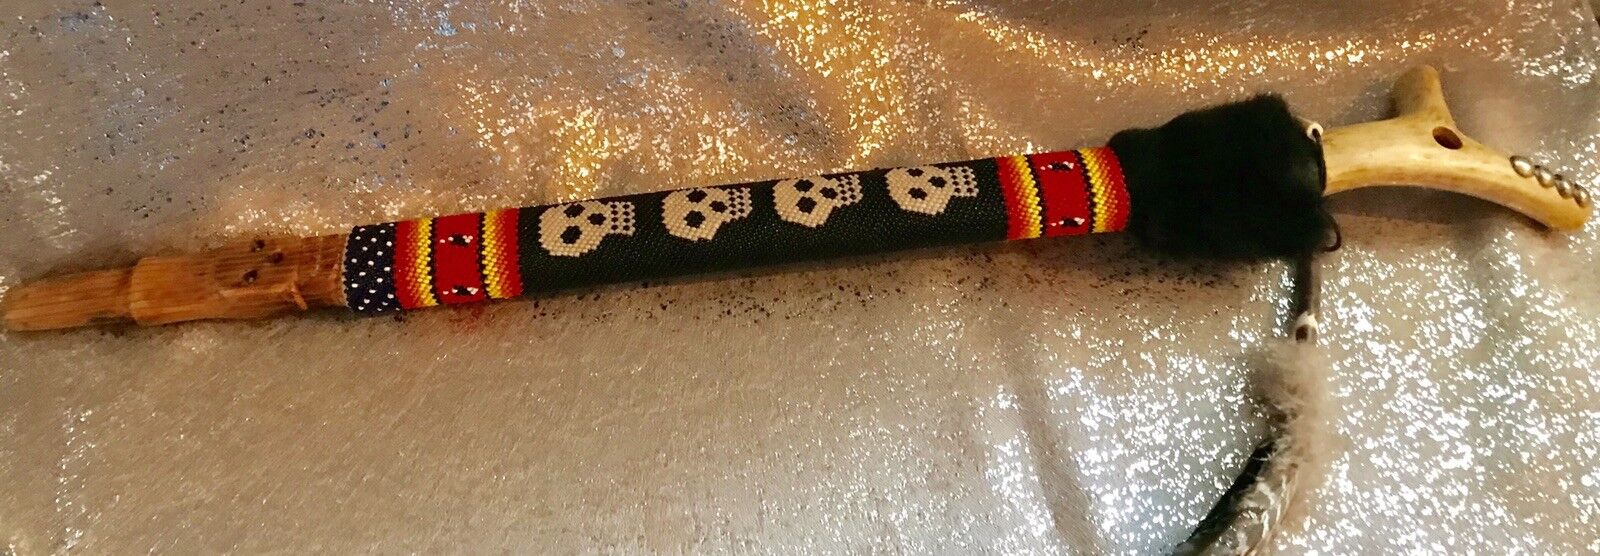 Hand Made Native American Pipe w glass beads, skull designs, deer Antler